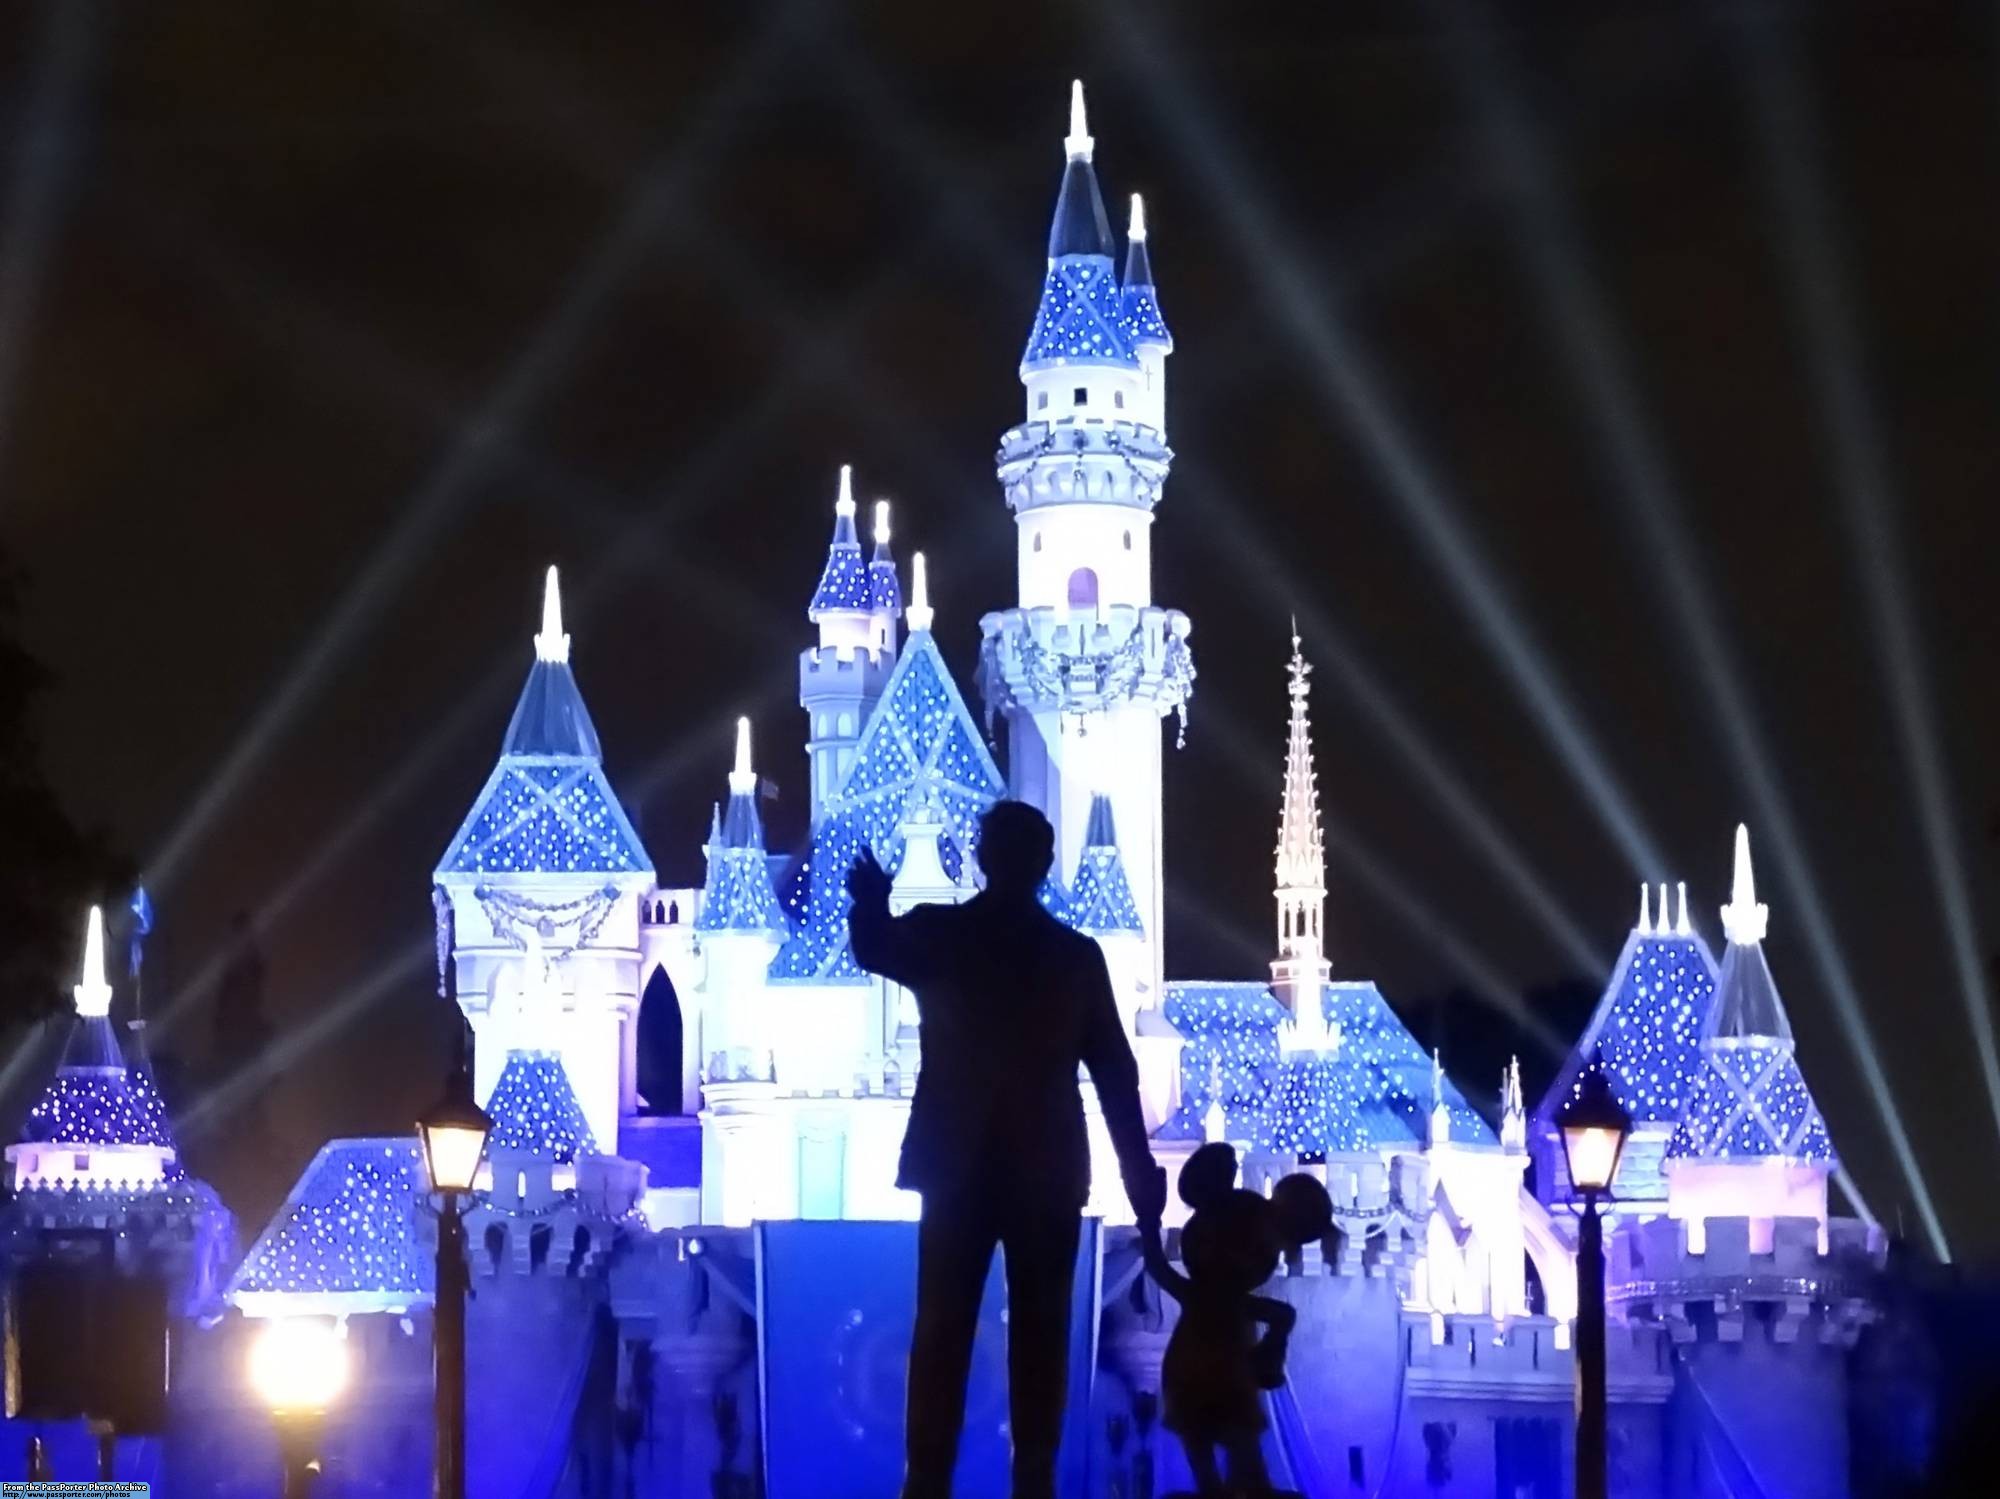 Disneyland - Sleeping Beauty Castle at night